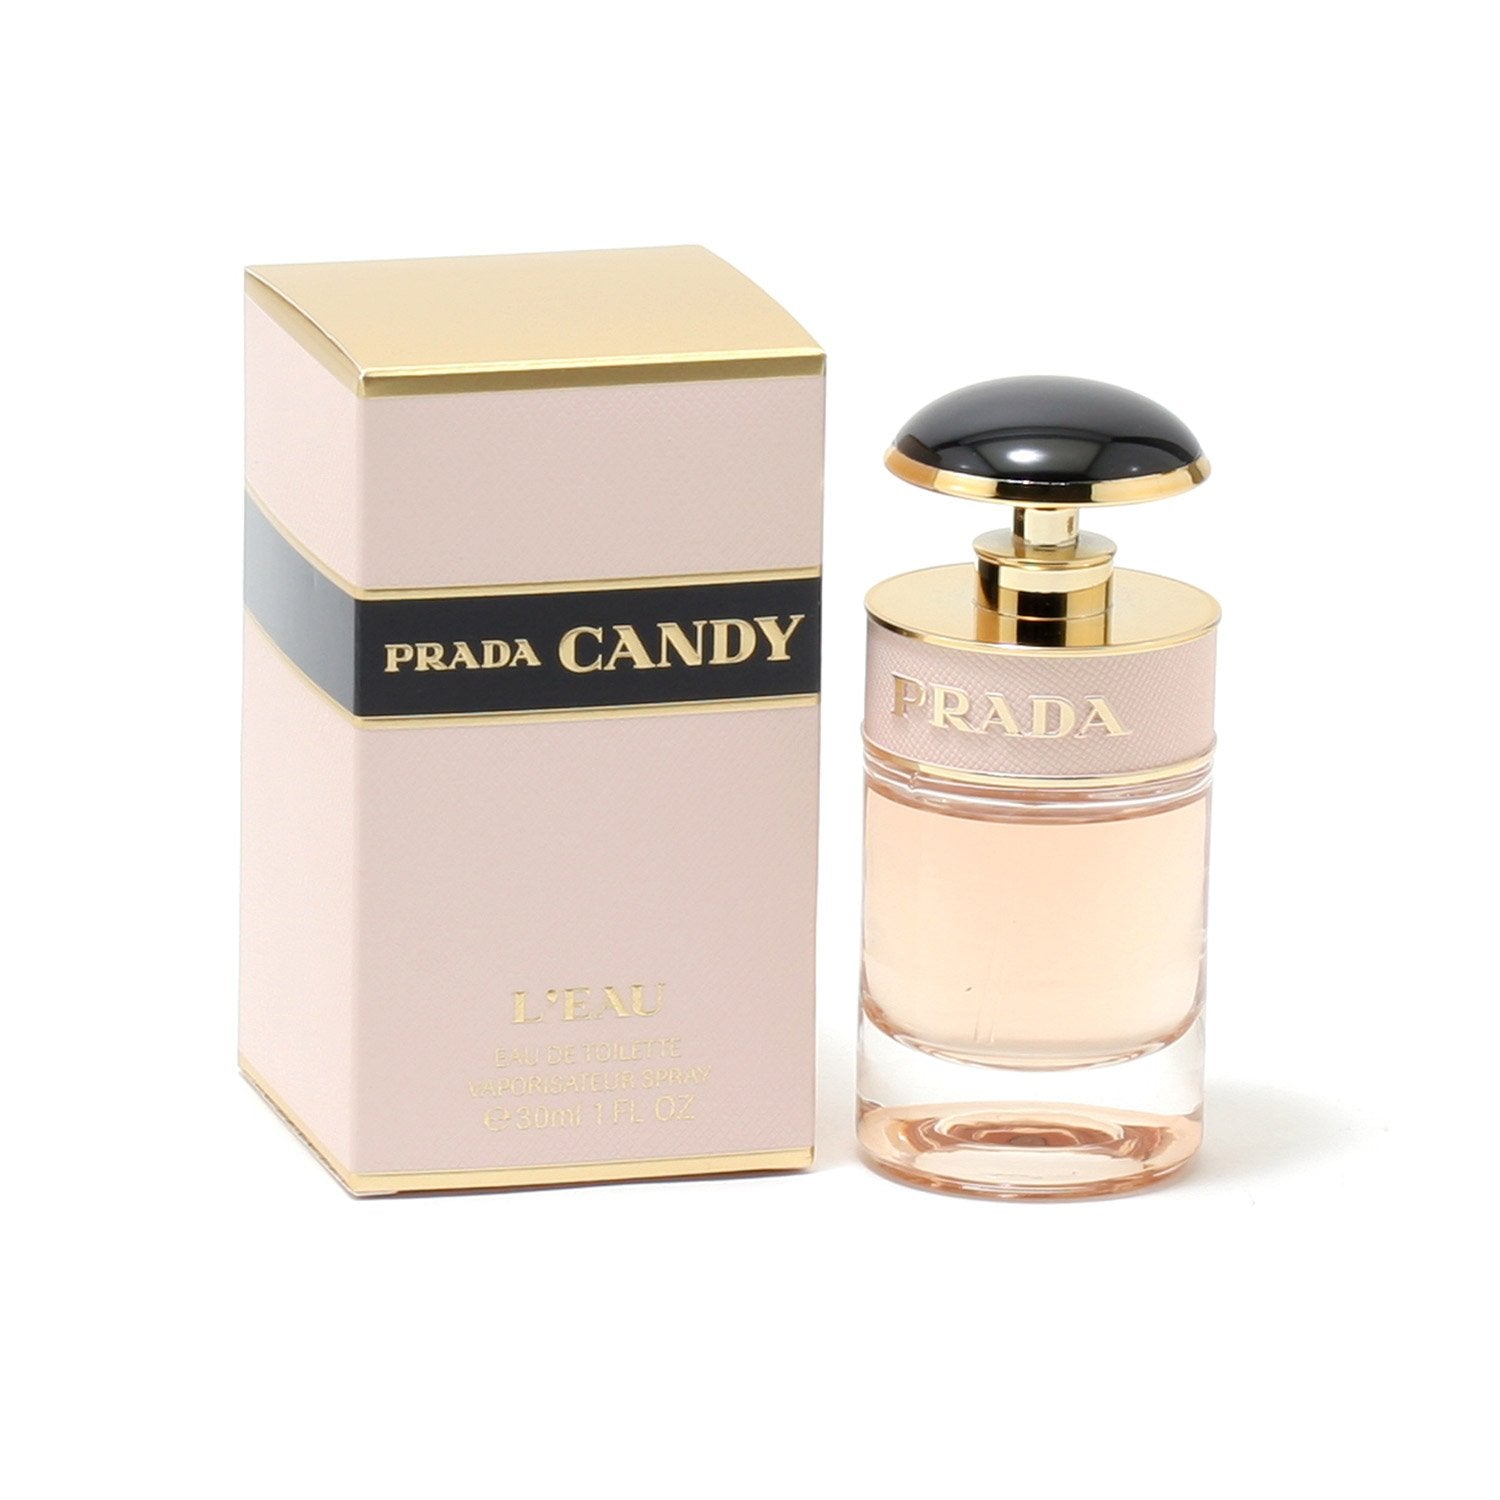 Prada Candy L'Eau EDT | My Perfume Shop Australia